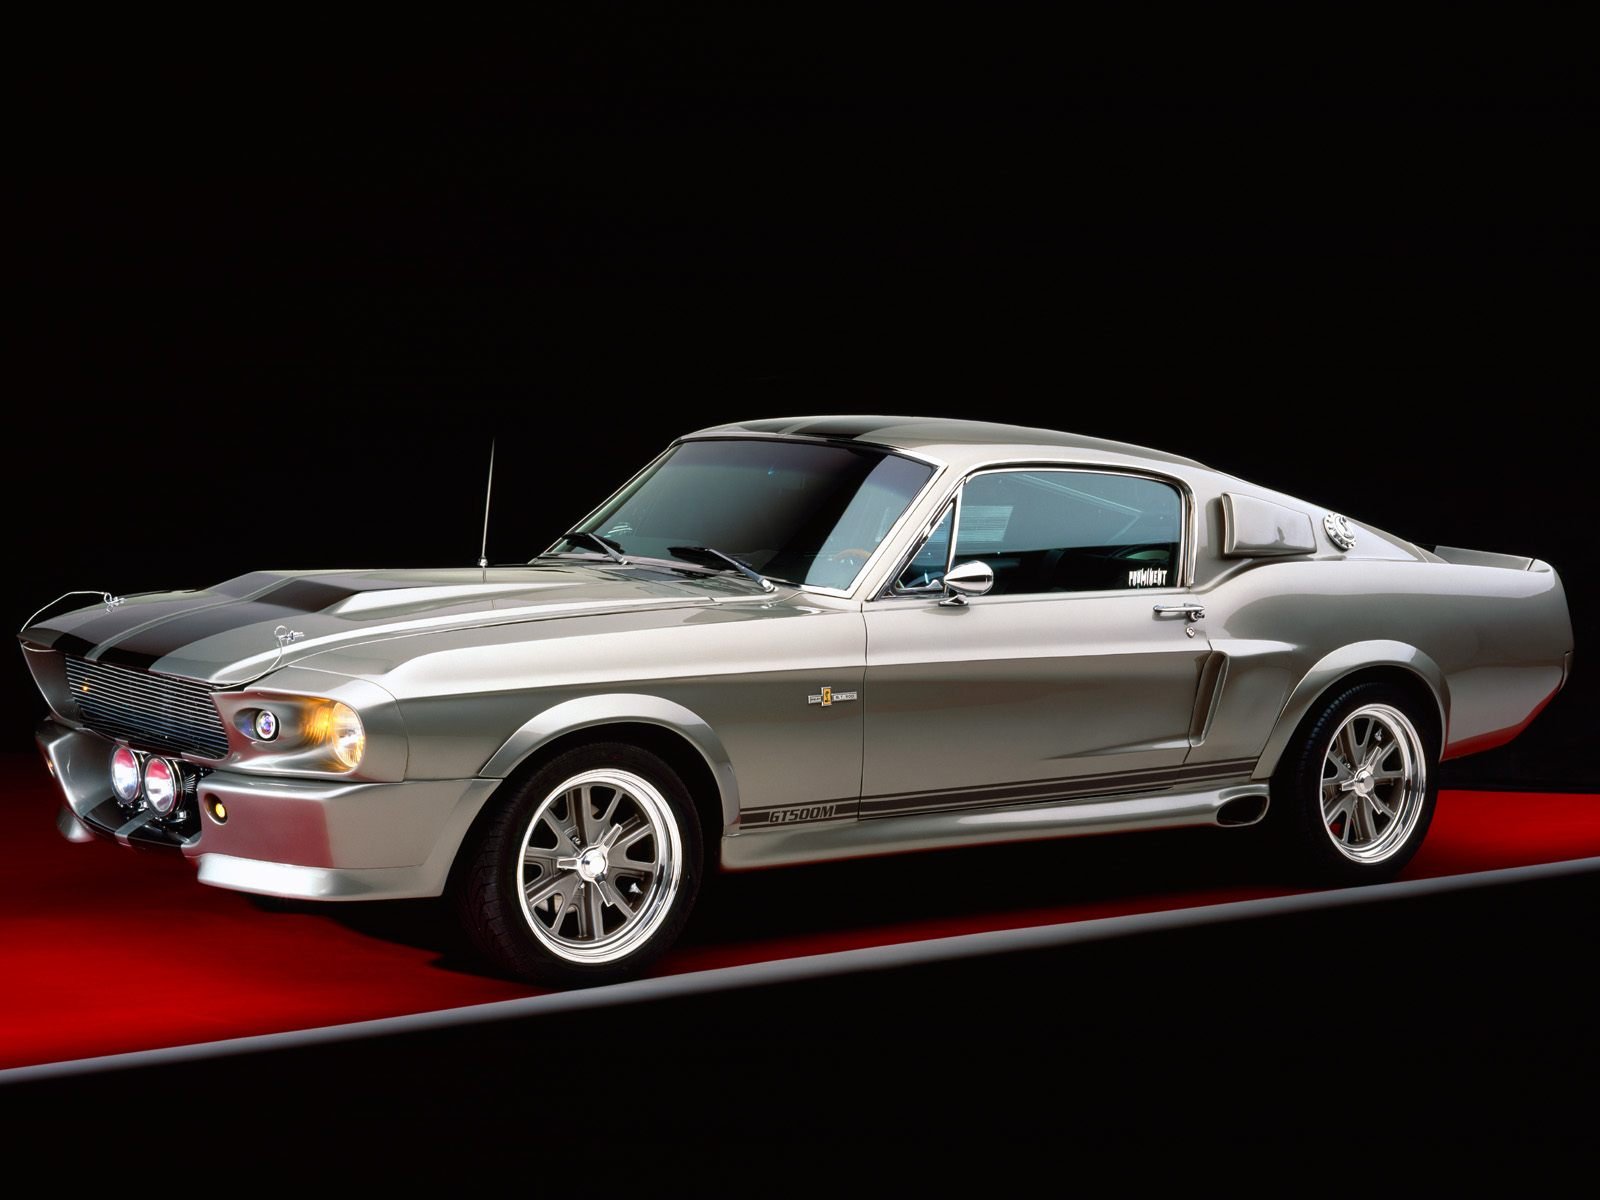 Free Desktop wallpaper downloads Ford Mustang car   Huge collection of 1600x1200